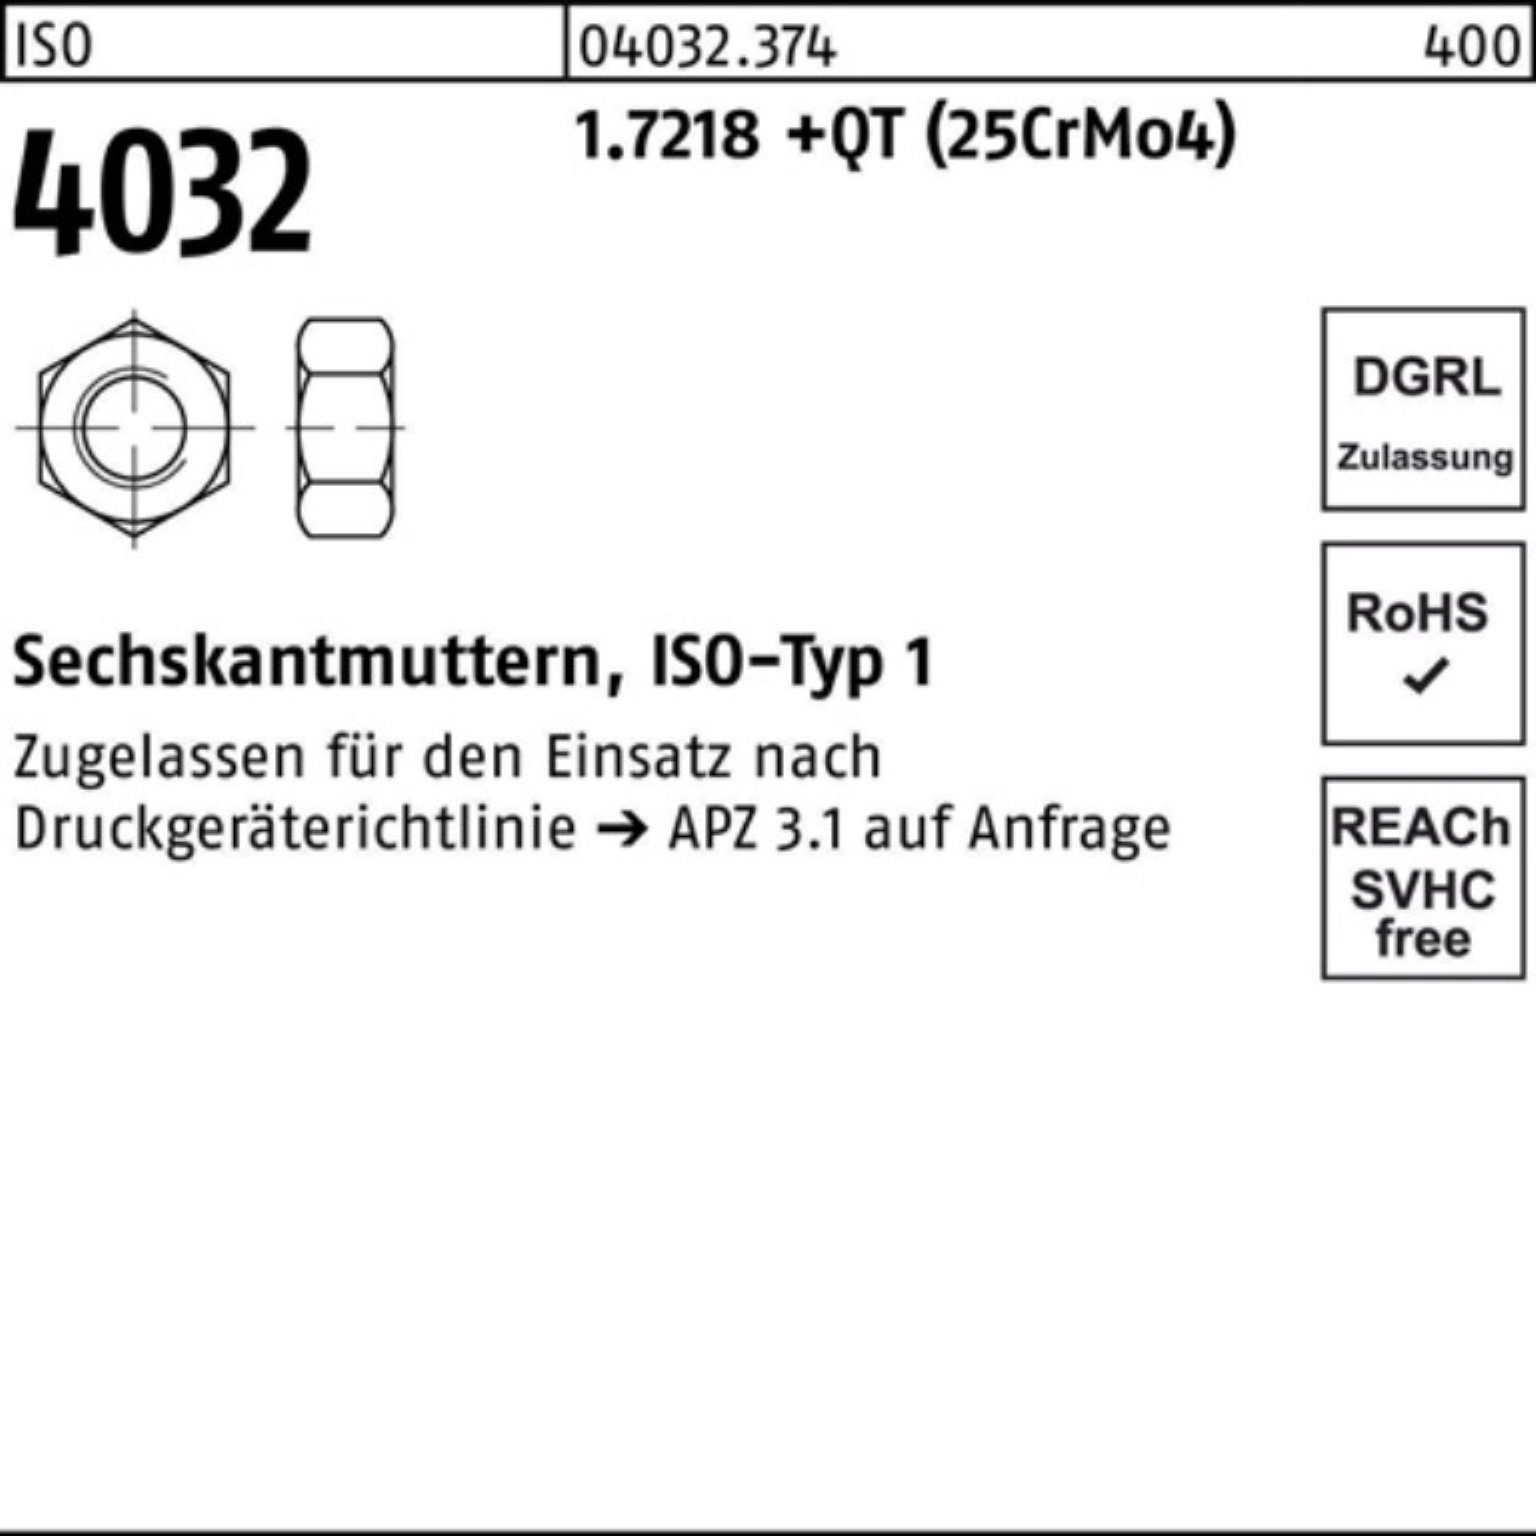 +QT Bufab 1.7218 Stück 4032 10 100er (25CrMo4) Sechskantmutter Muttern M36 ISO Pack